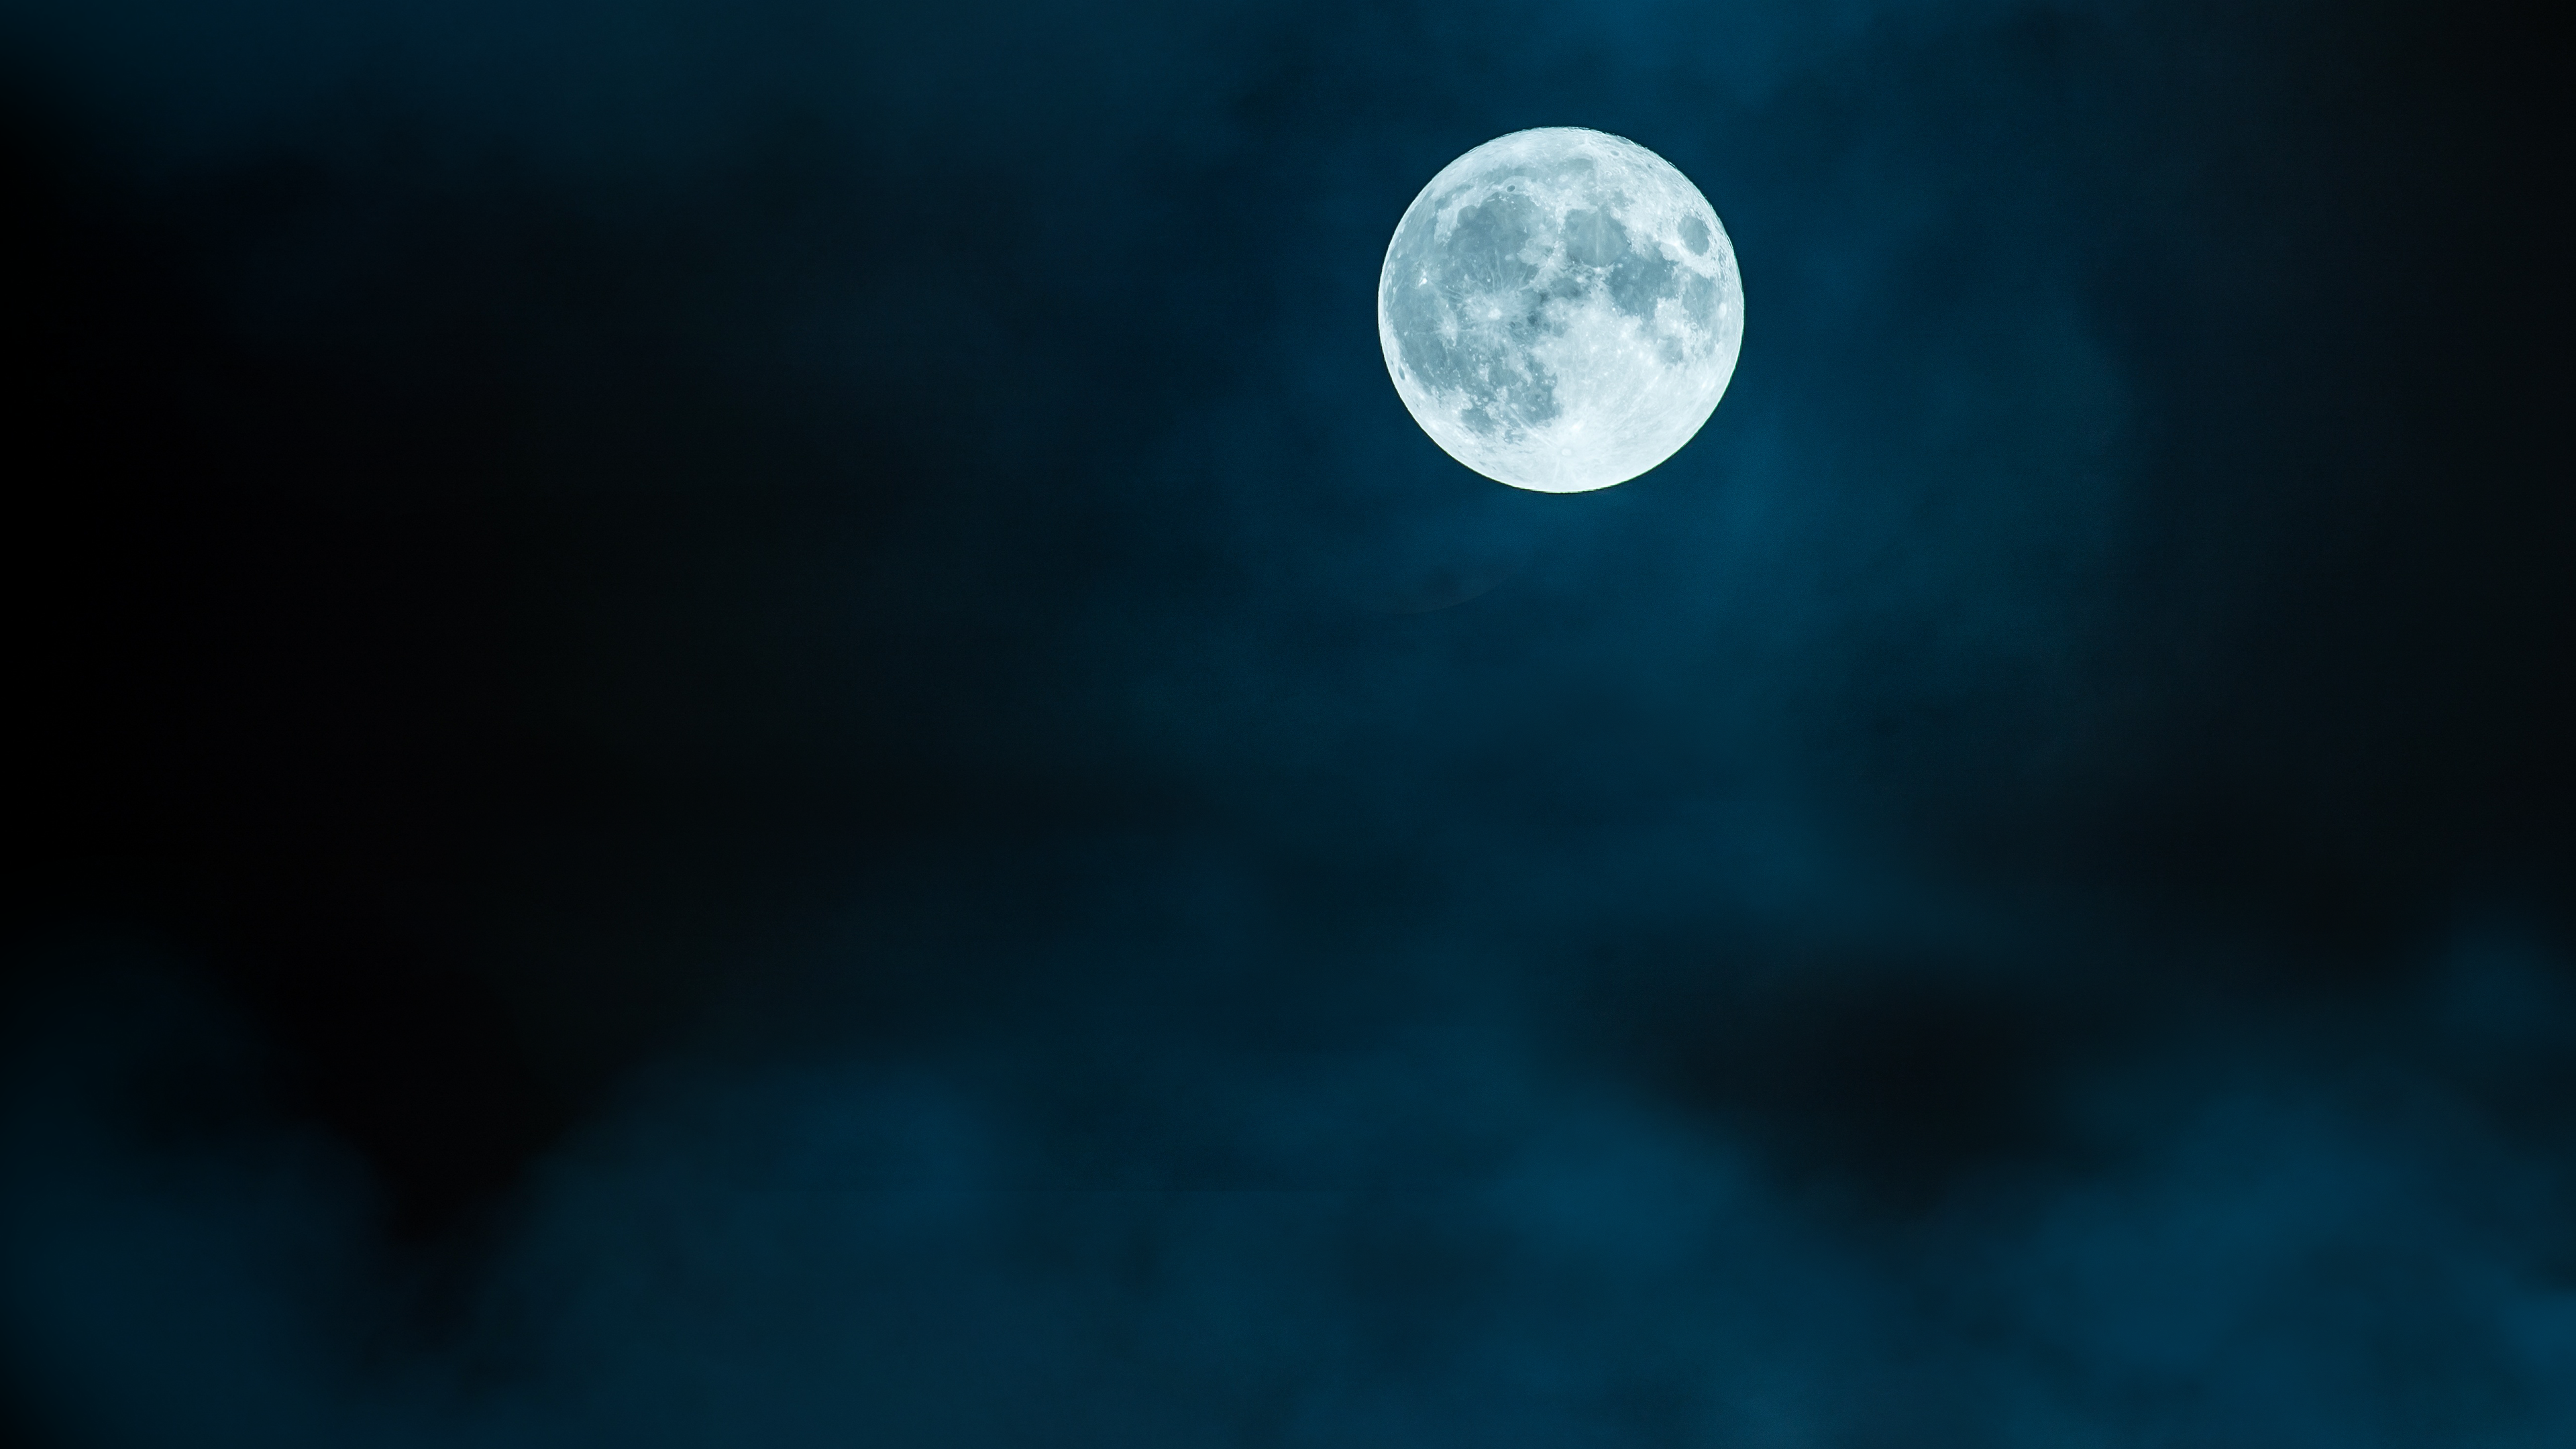 Full HD Wallpaper of a Full Moon